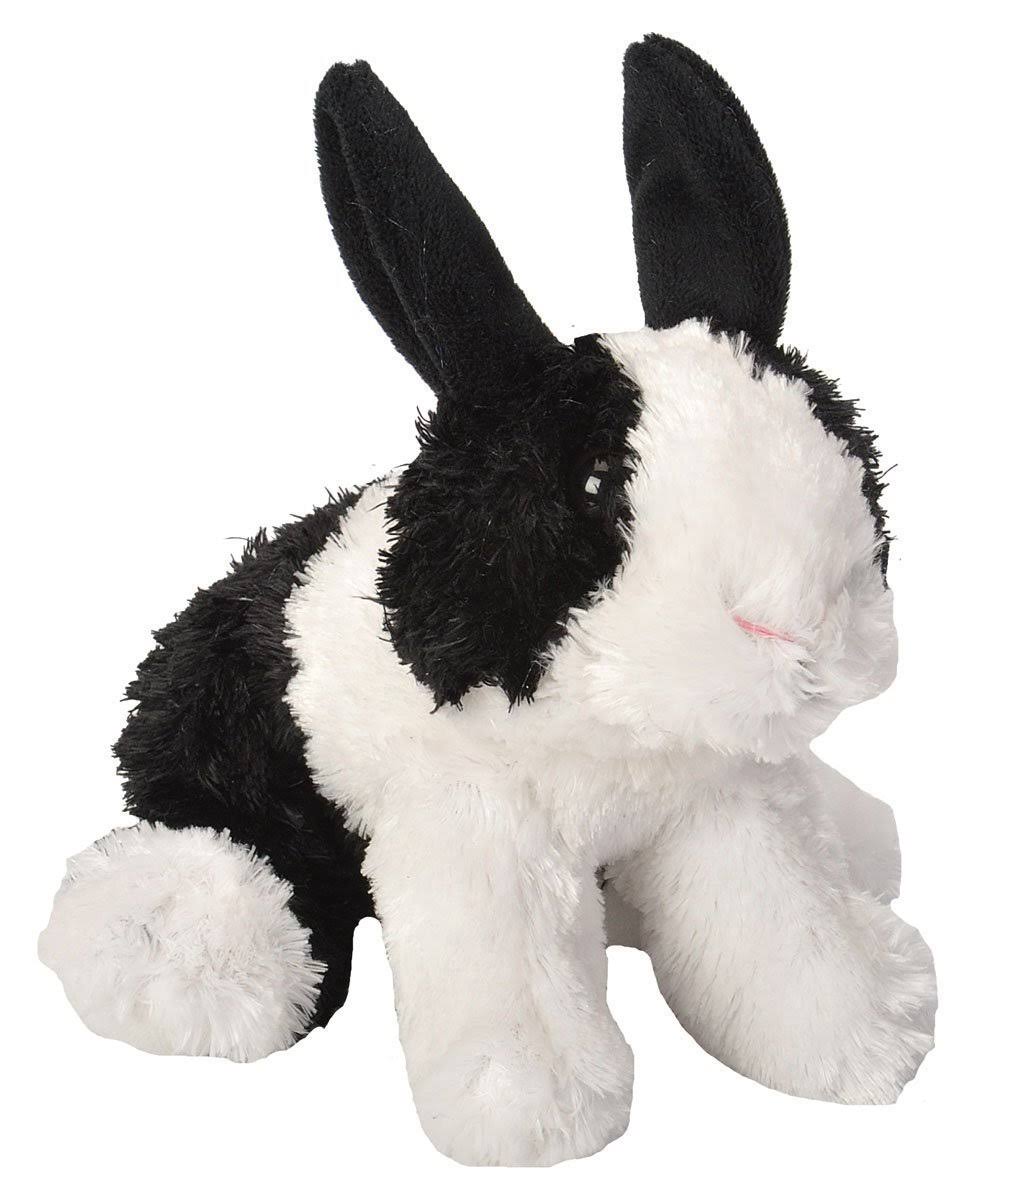 Wild Republic Hug'ems Bunny Plush Toy - Black/White, 18cm